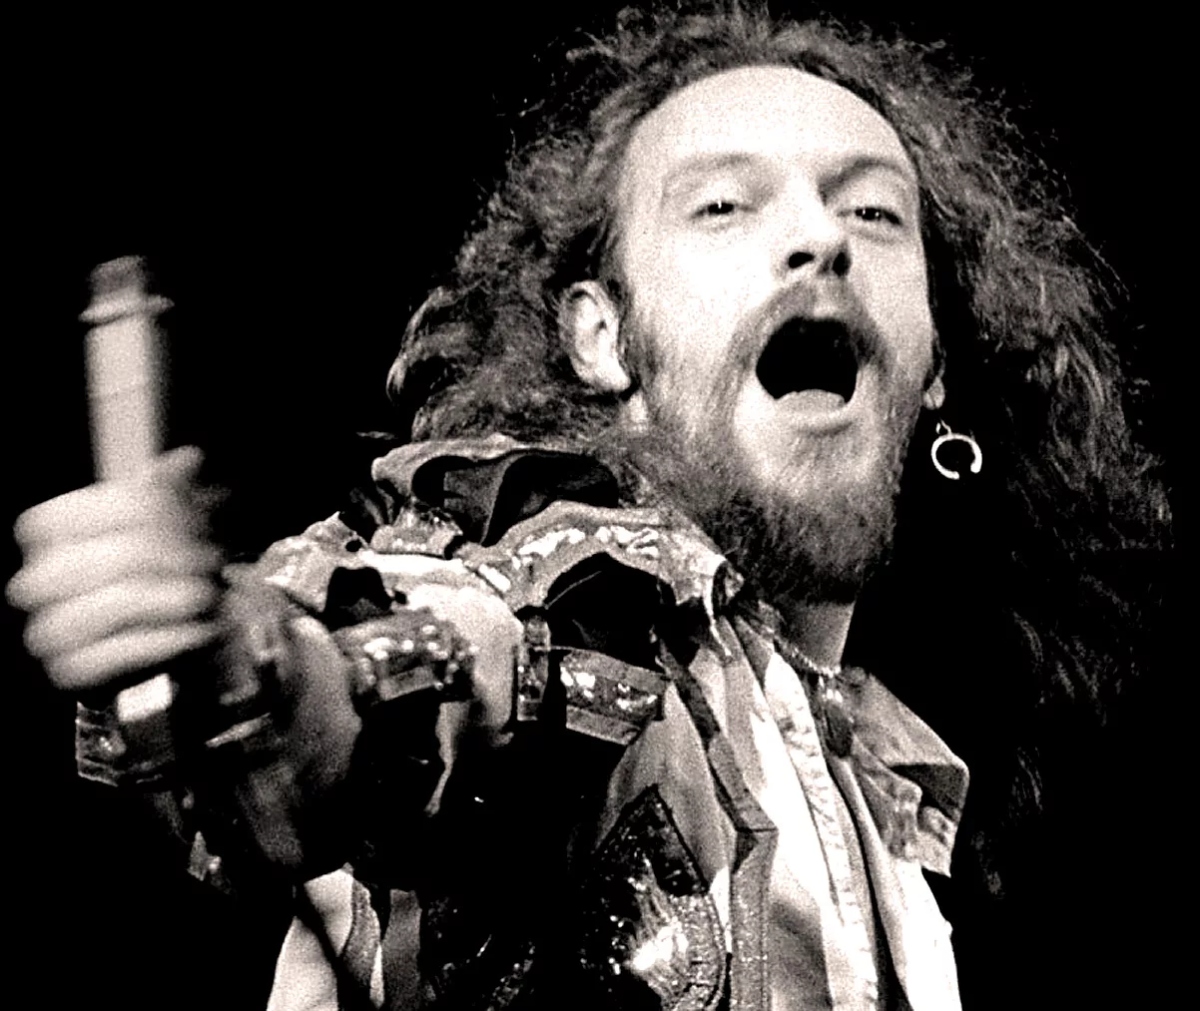 Jethro Tull leader Ian Anderson como um jovem